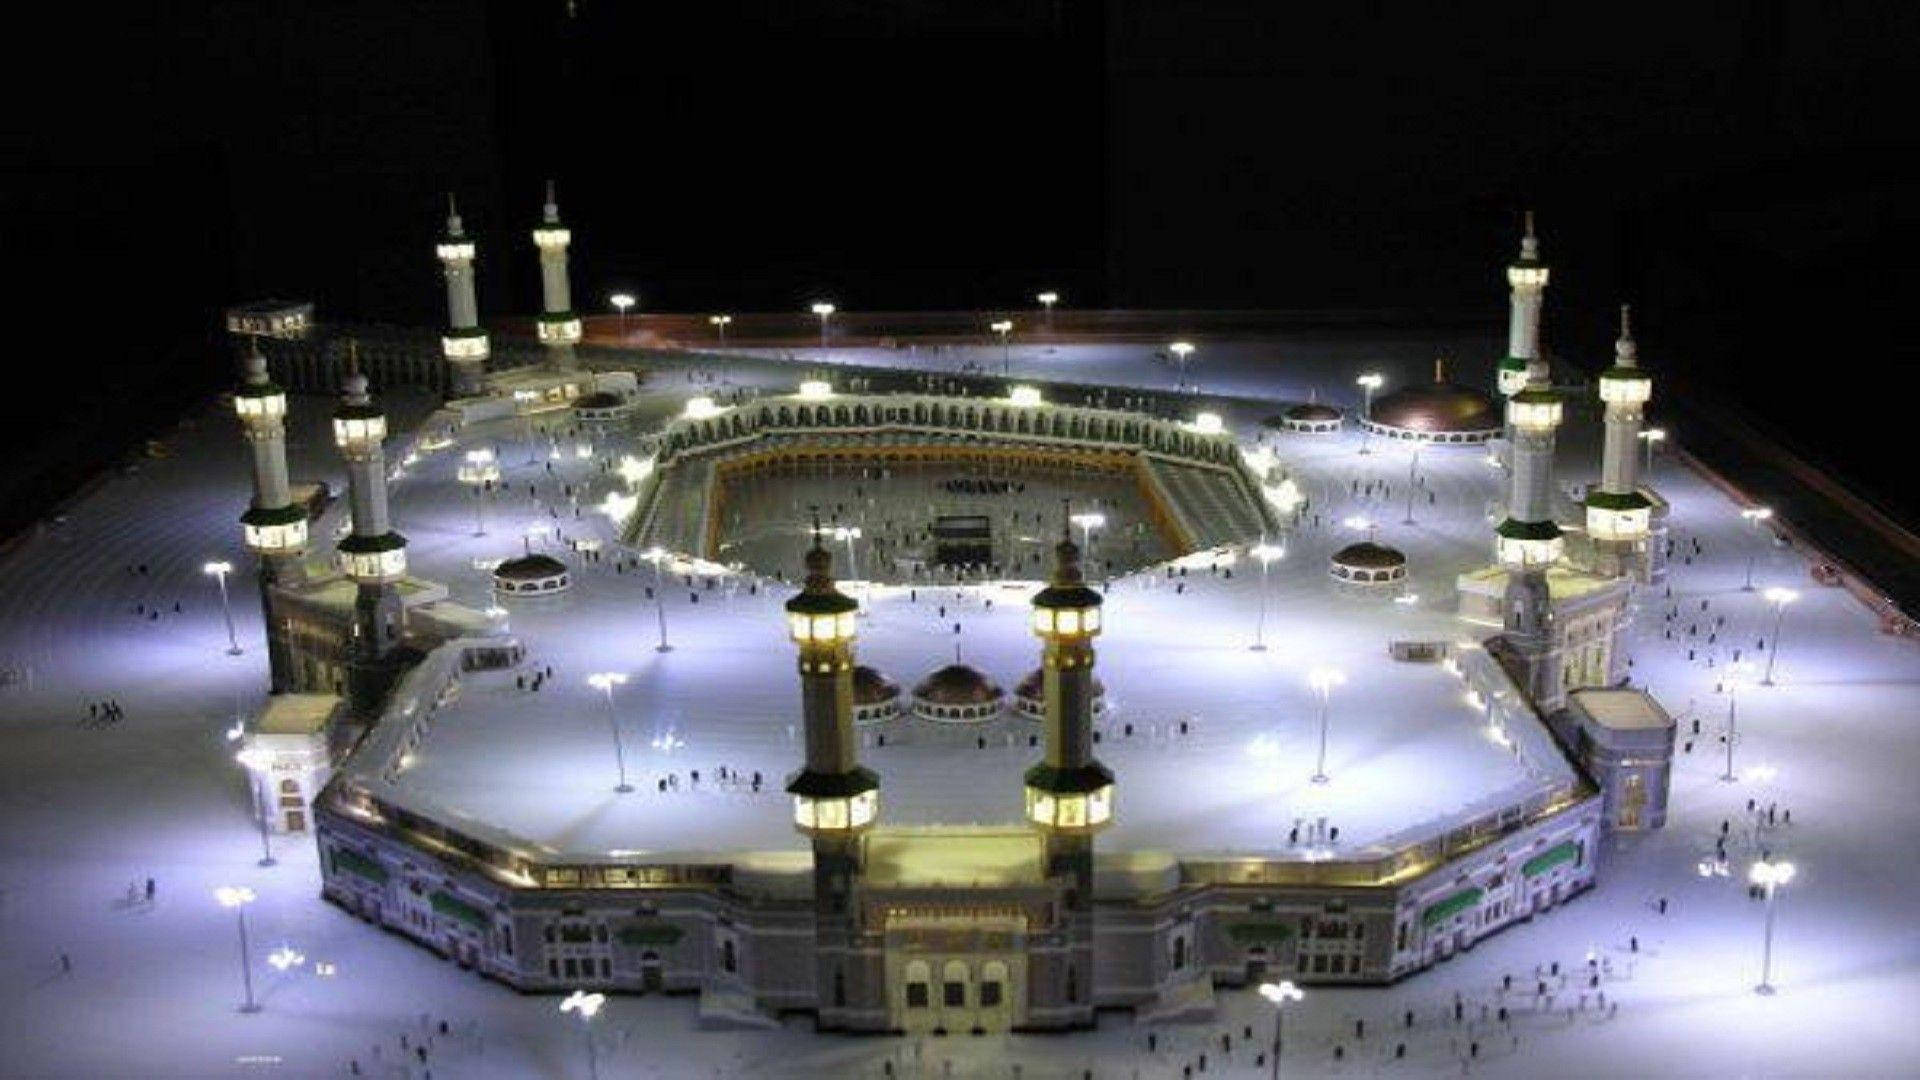 Masjid Al-haram Mosque Miniature Scale Model